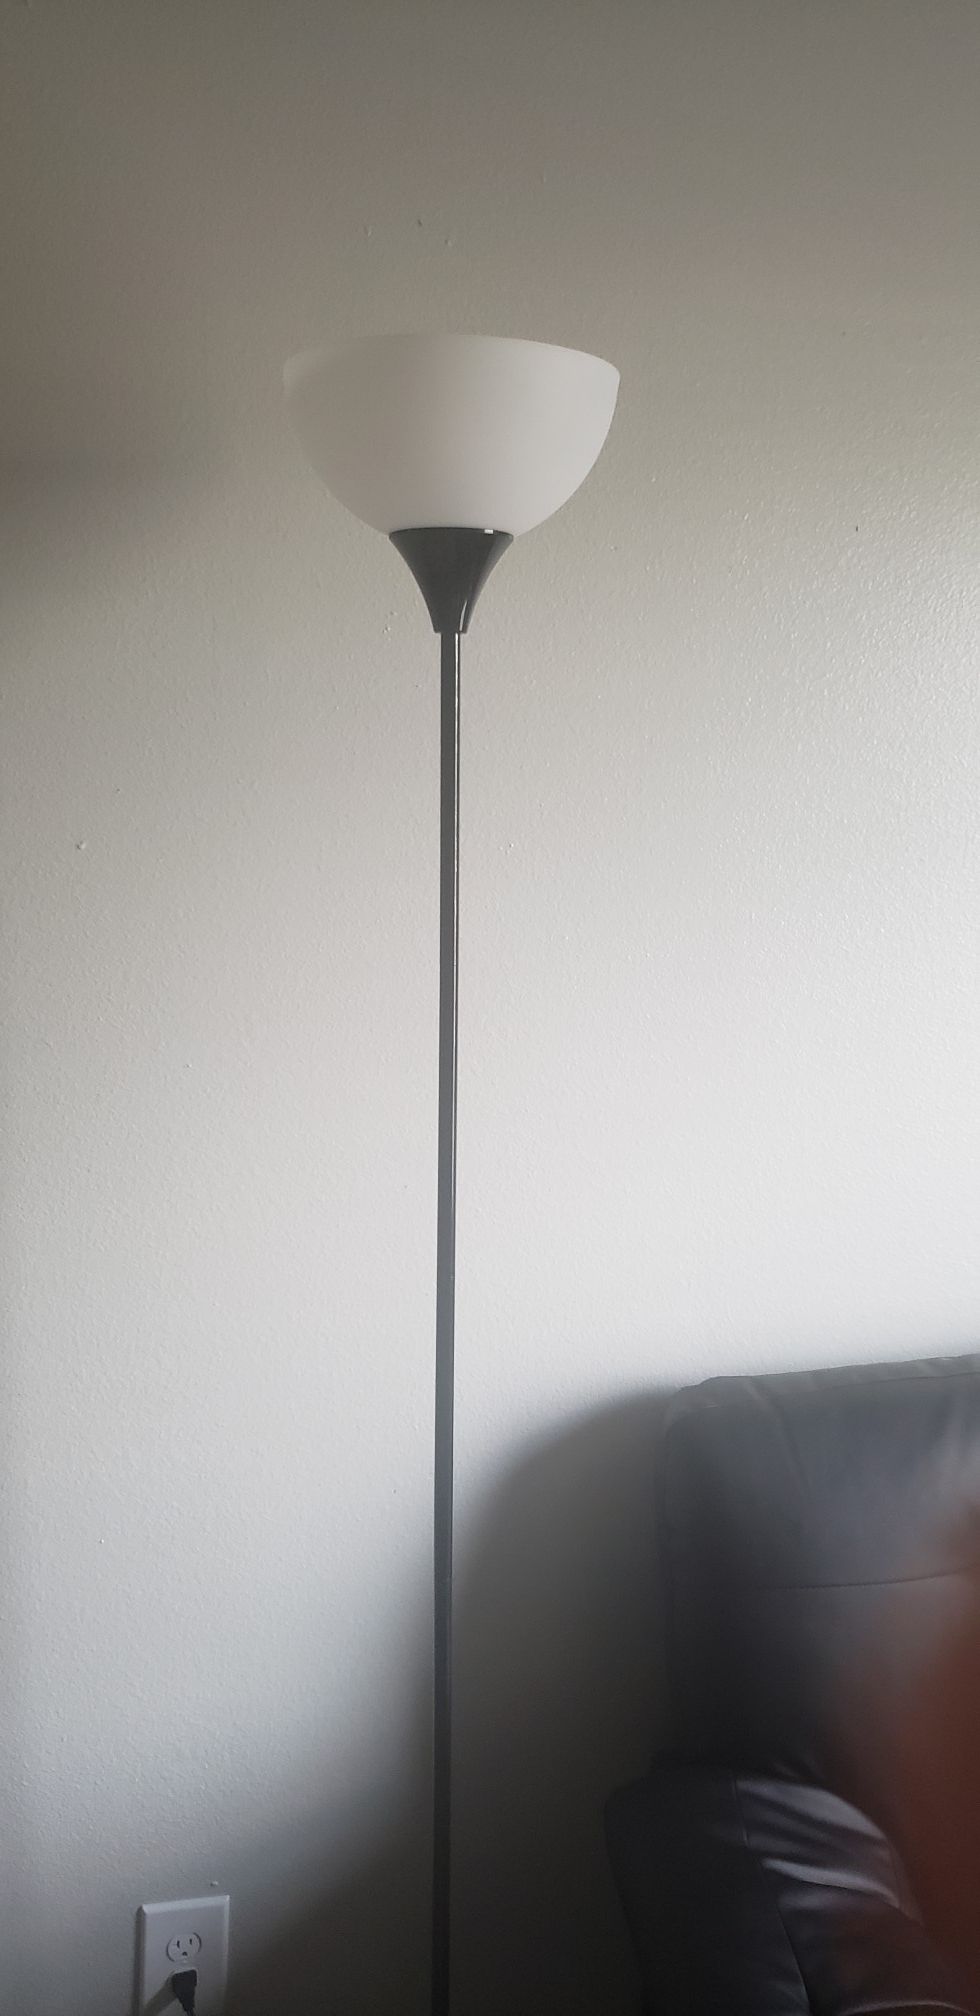 Bed lamp-1 living room lamp-1